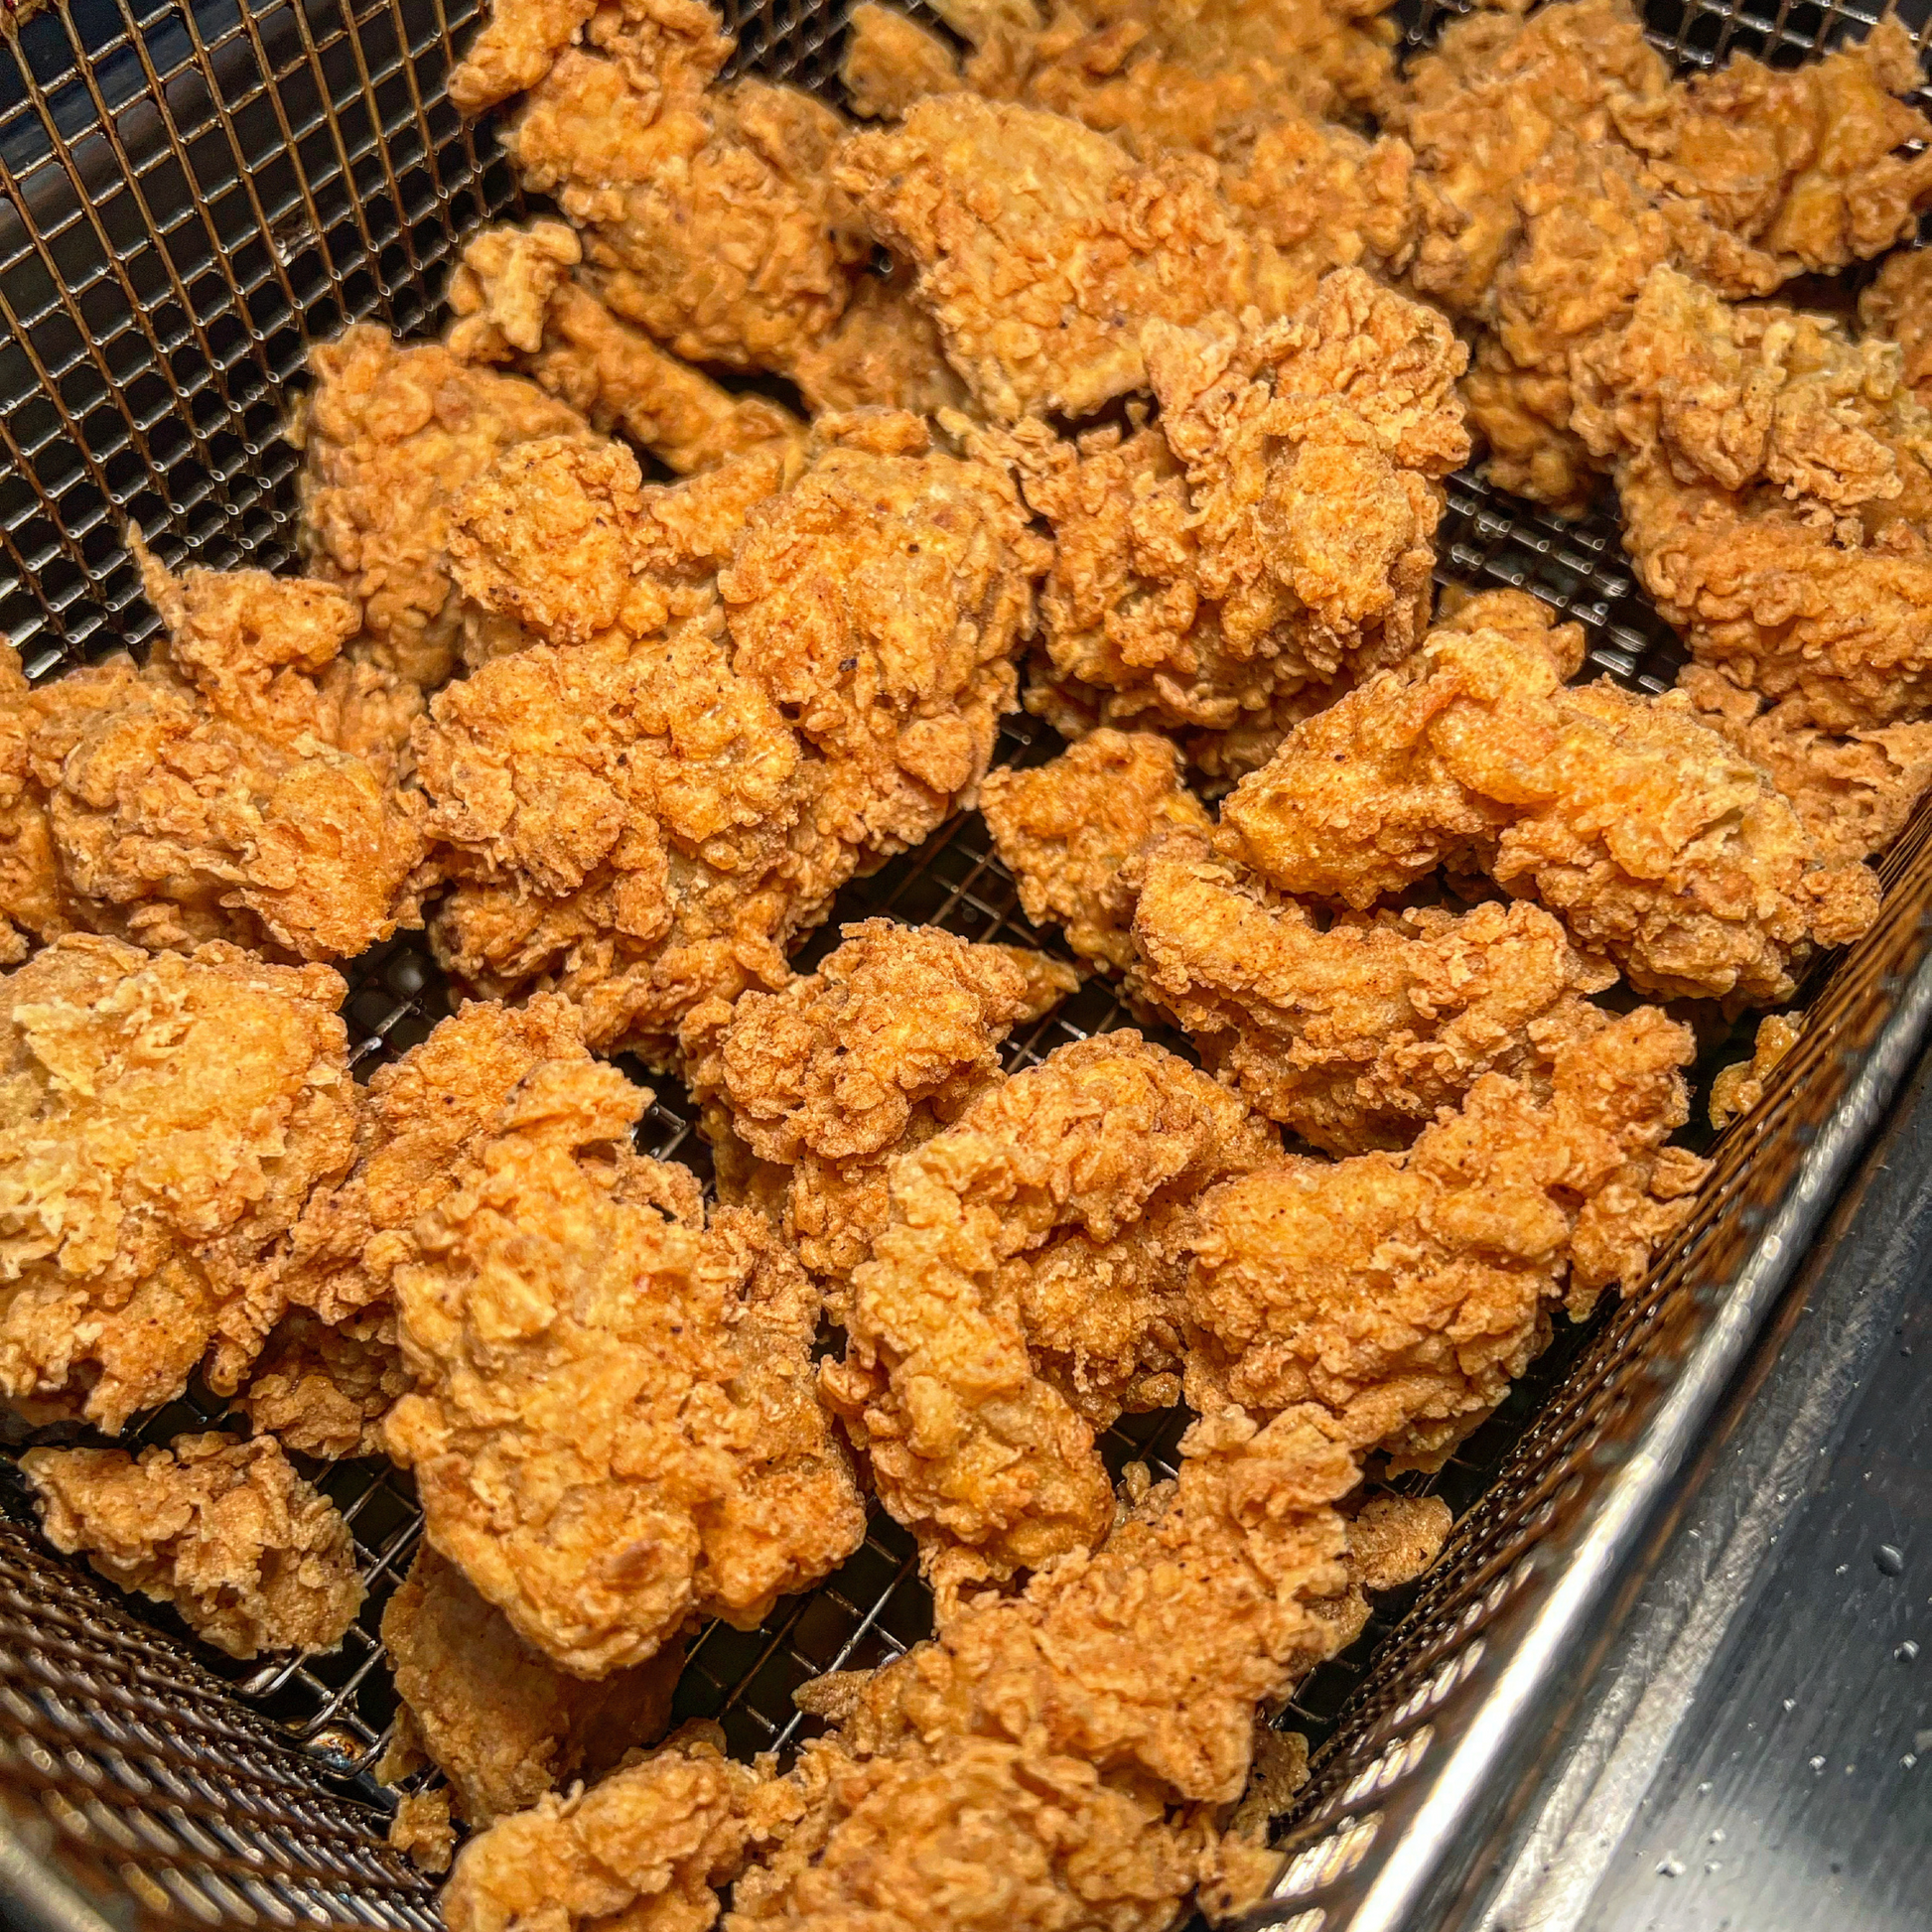 vegan chicken pieces breaded and deep fried like vegan KFC in a deep fryer metal basket, serving suggestion